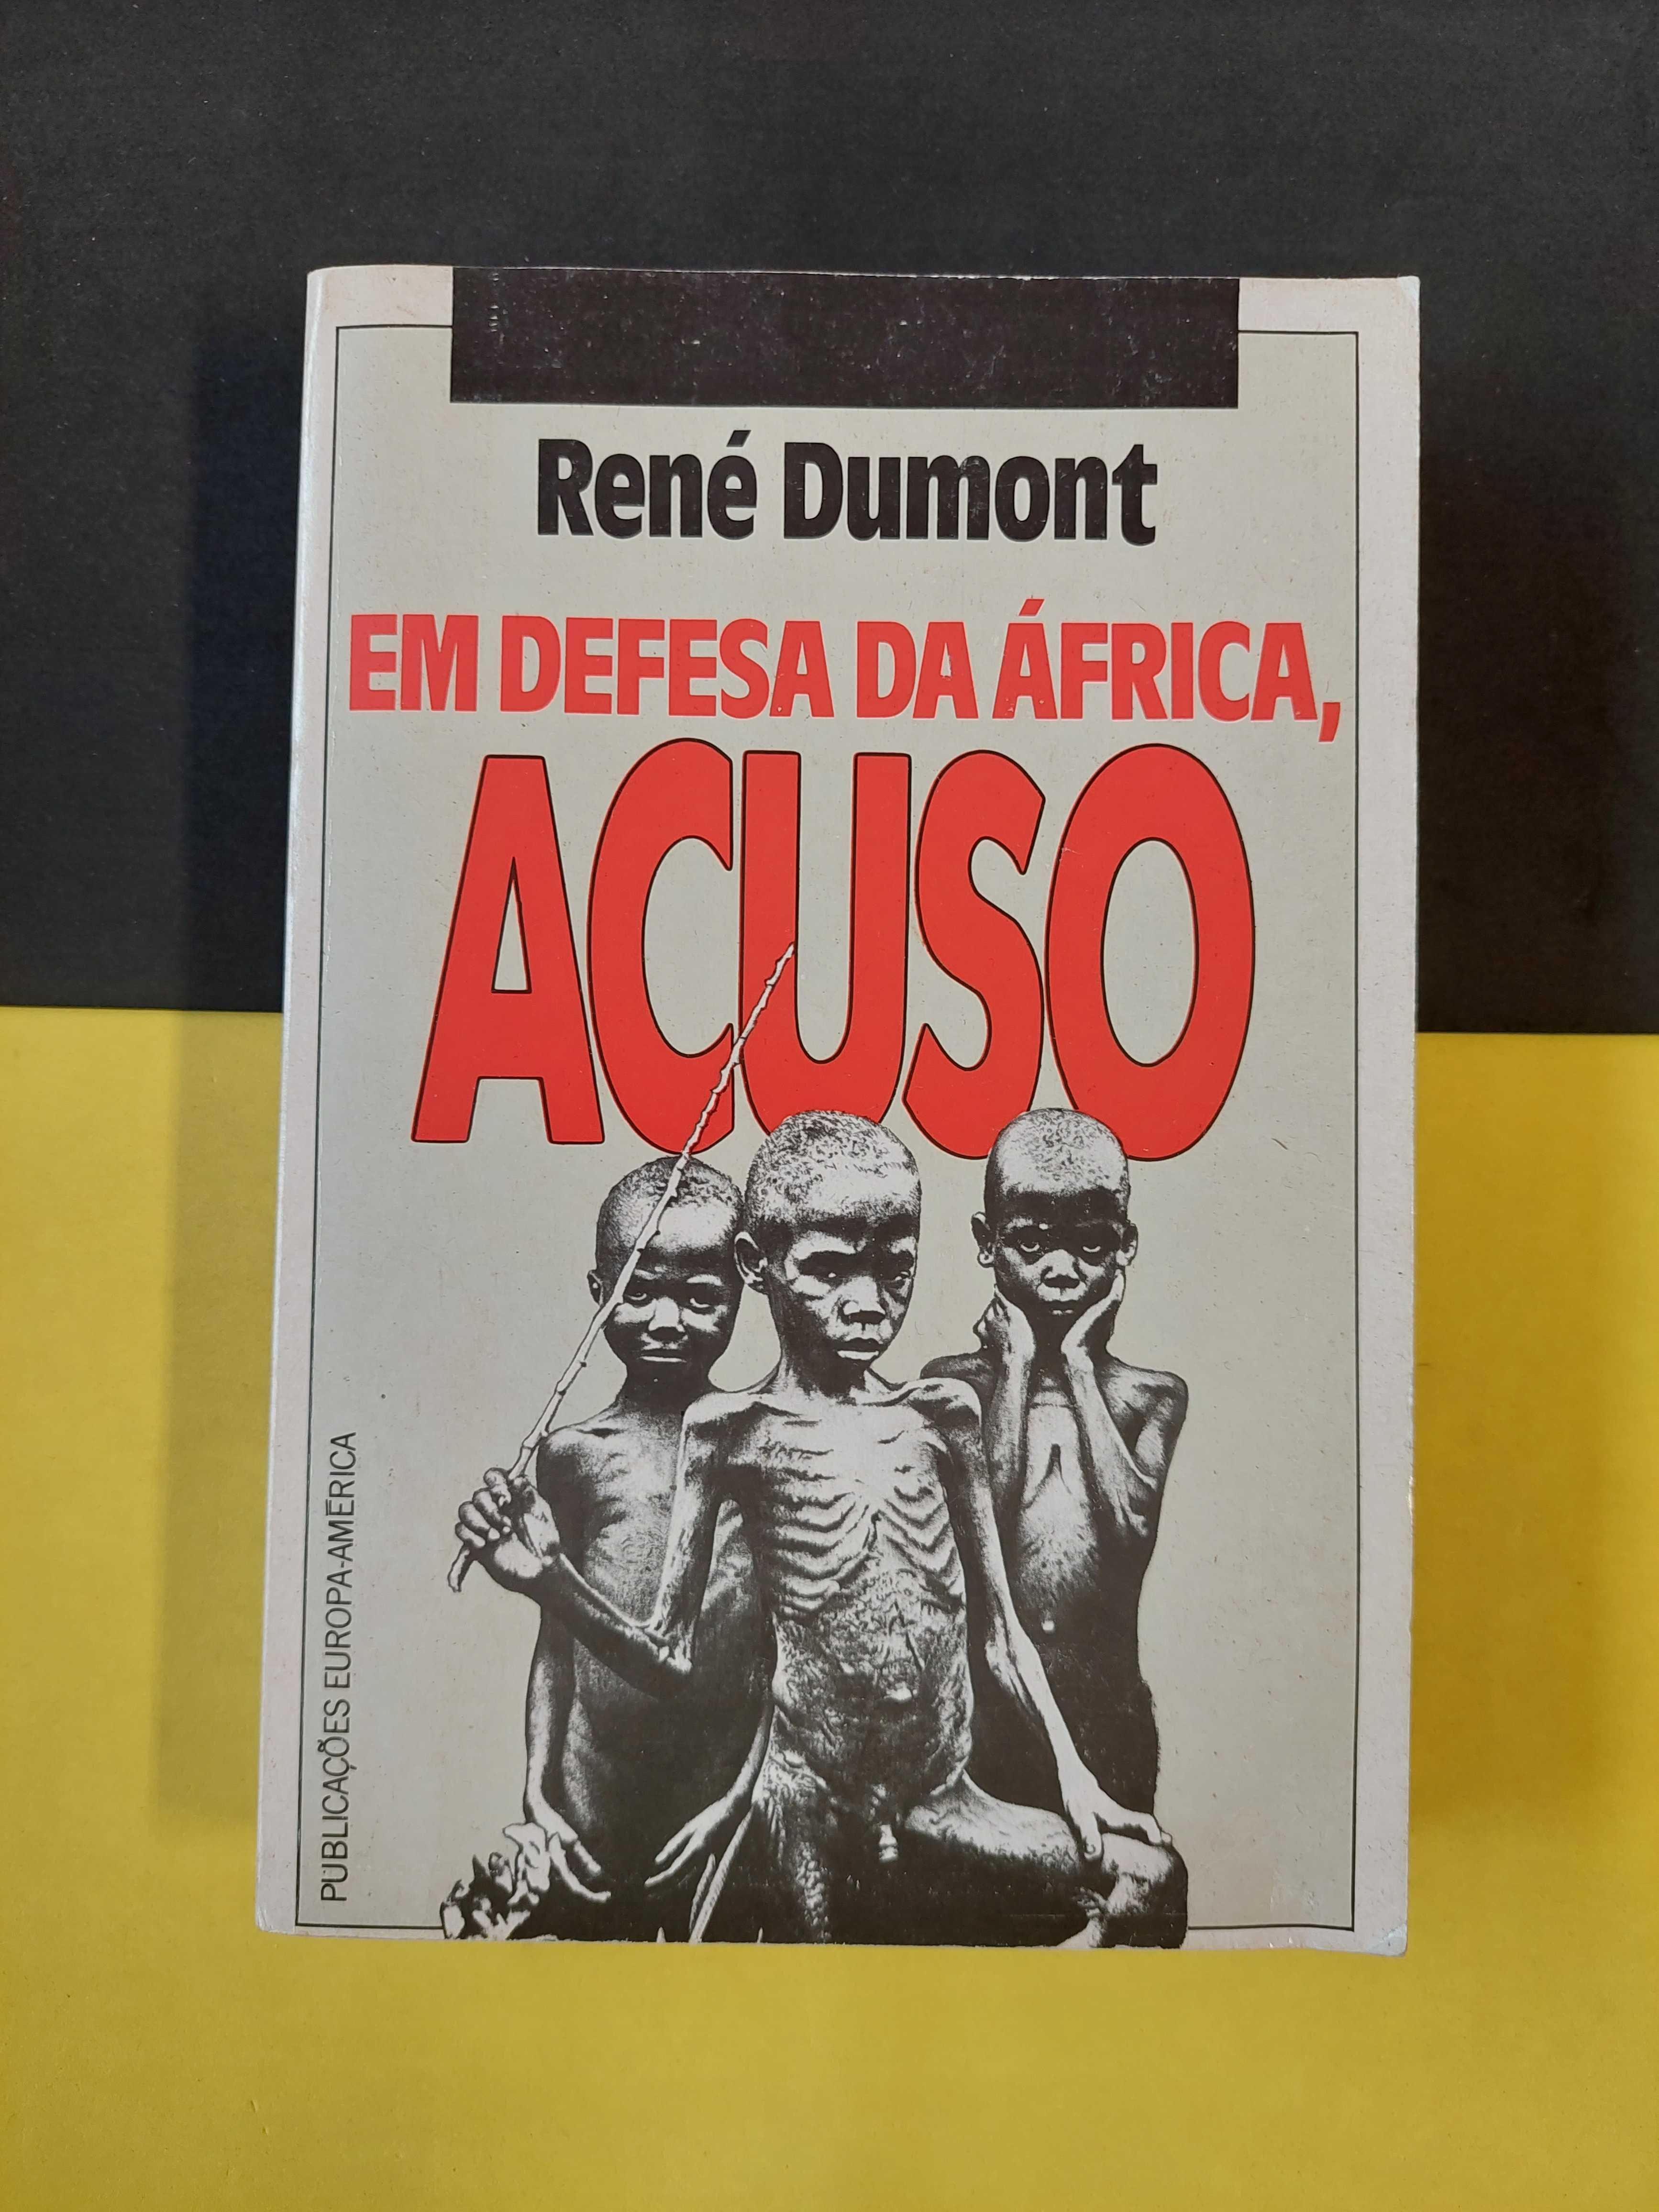 René Dumont - Em defesa da África, acuso